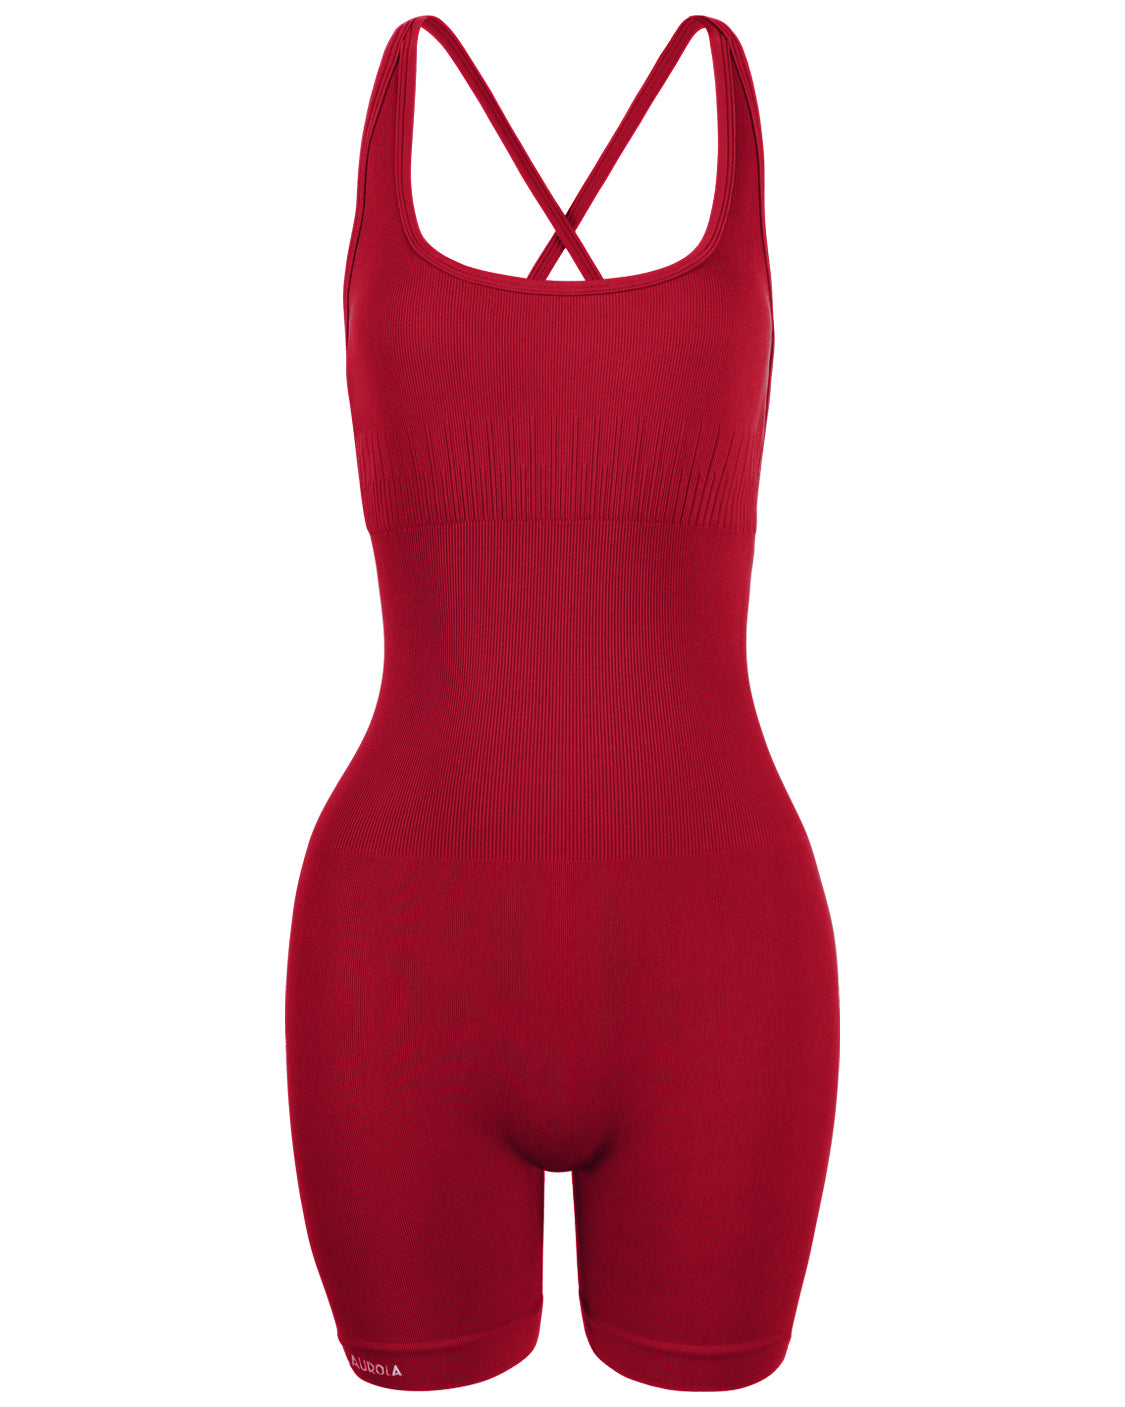 aurola shorts Red Size L - $15 (54% Off Retail) - From Regan